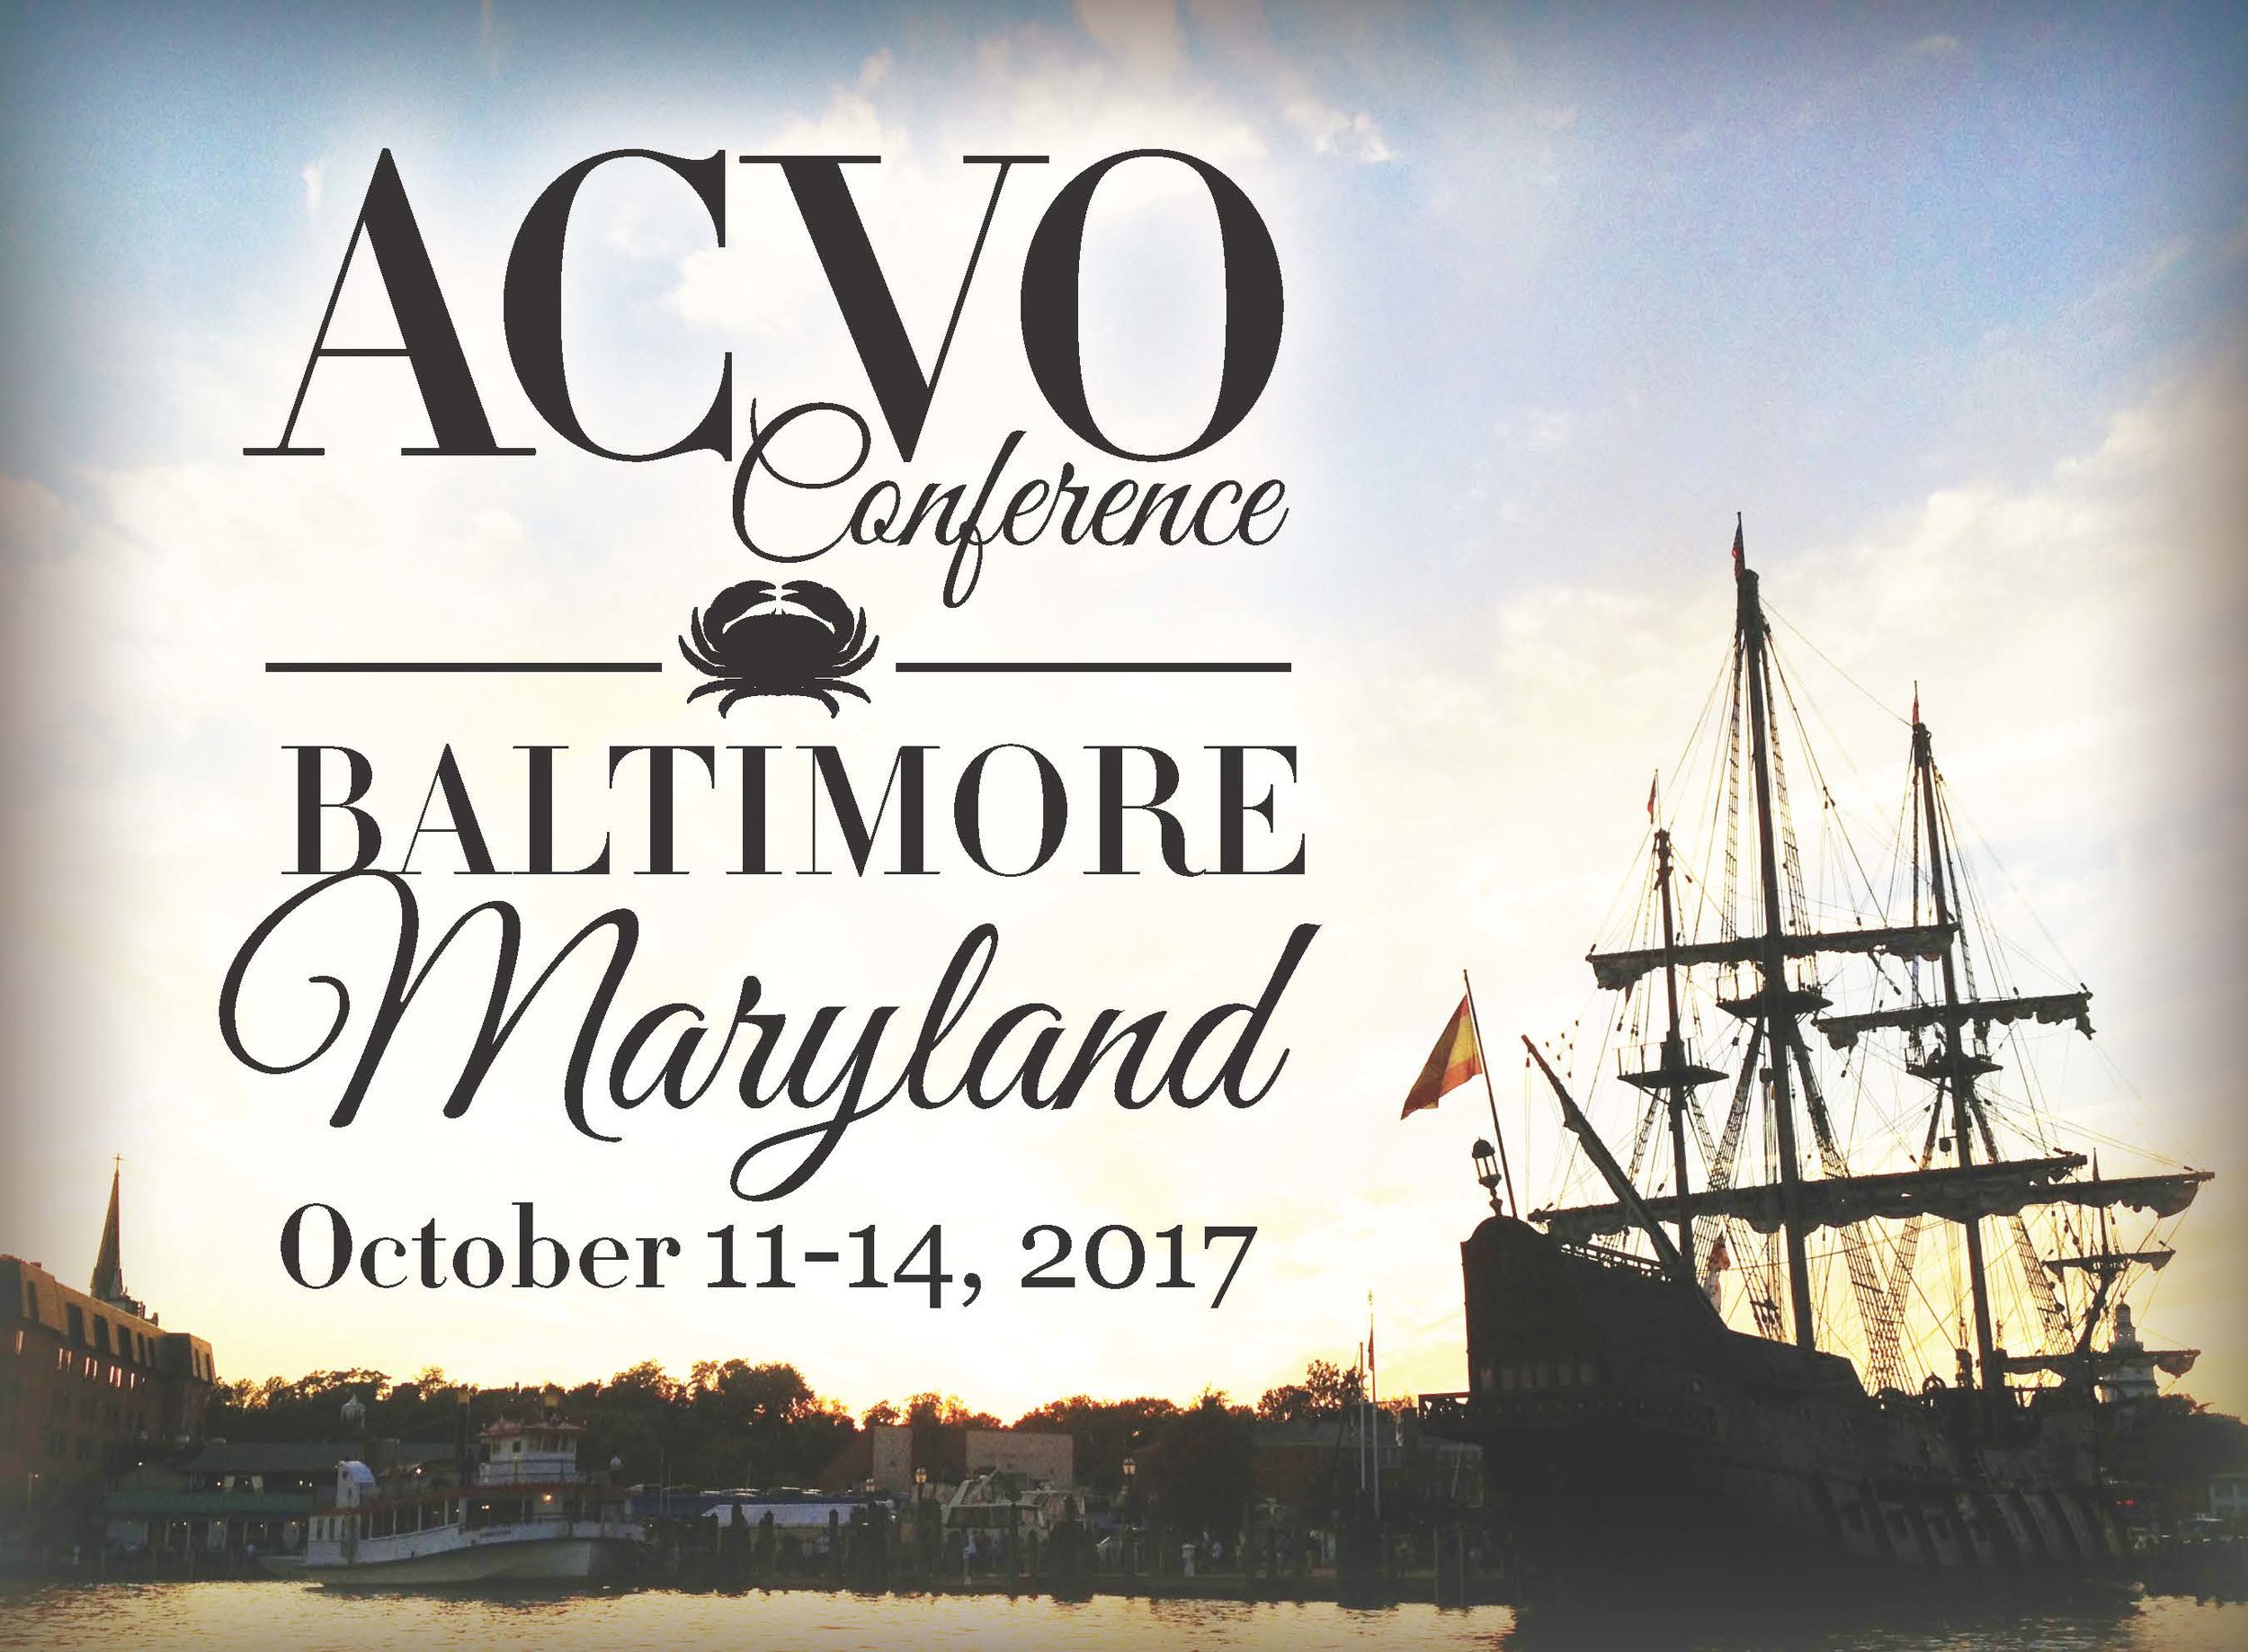 ACVO-Conference-800x583-2017-LRG.jpg